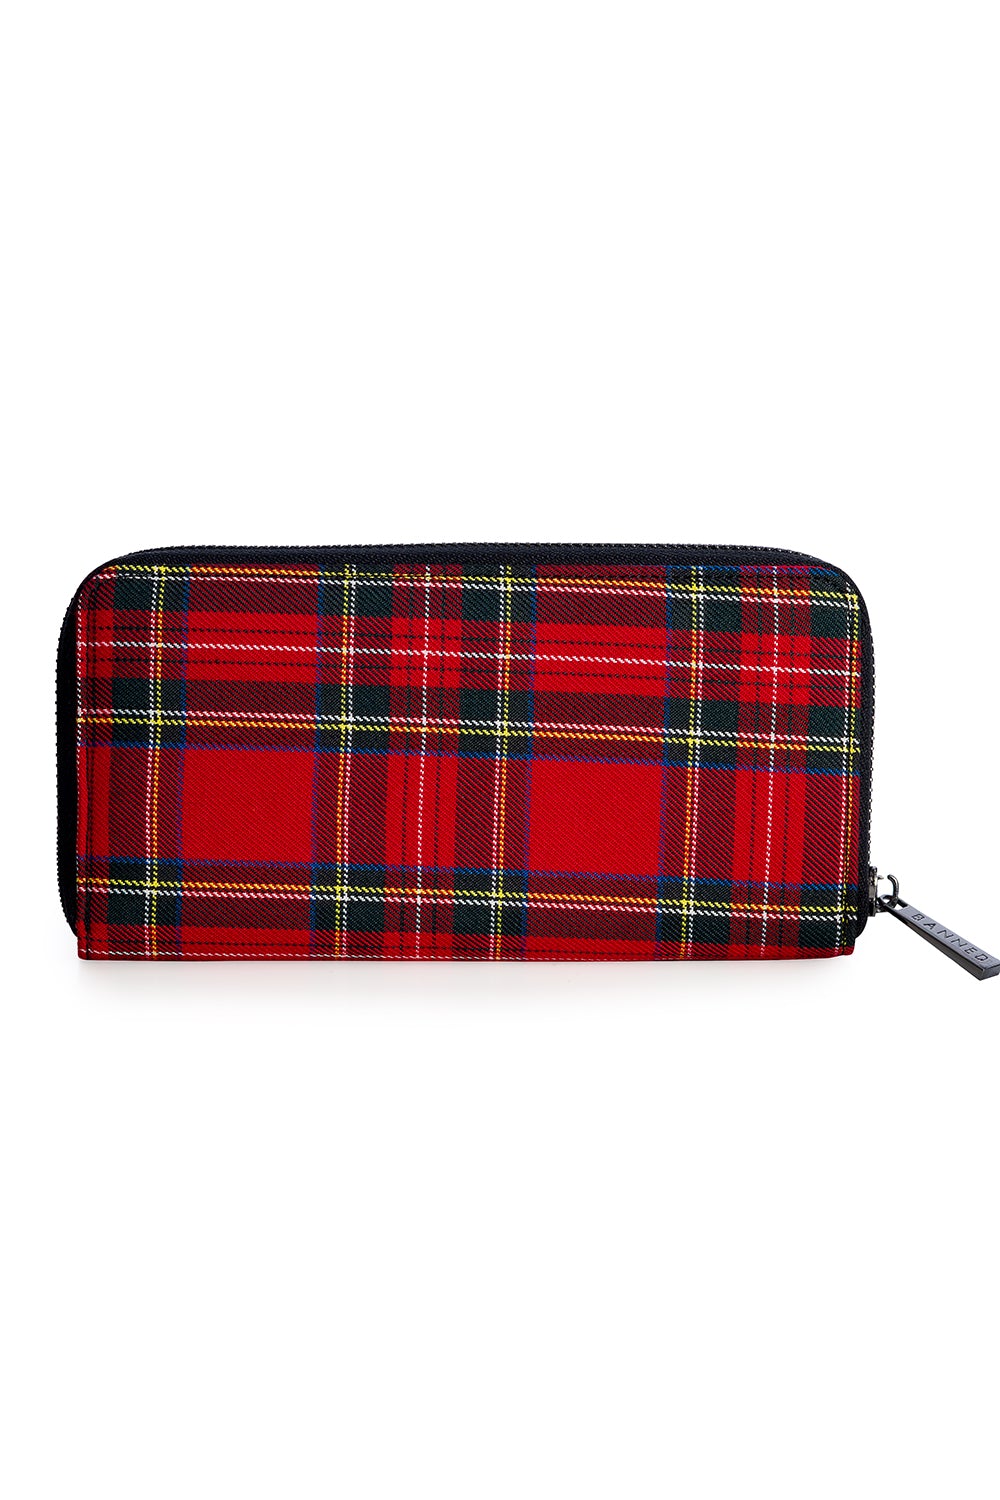 Back of red tartan print purse